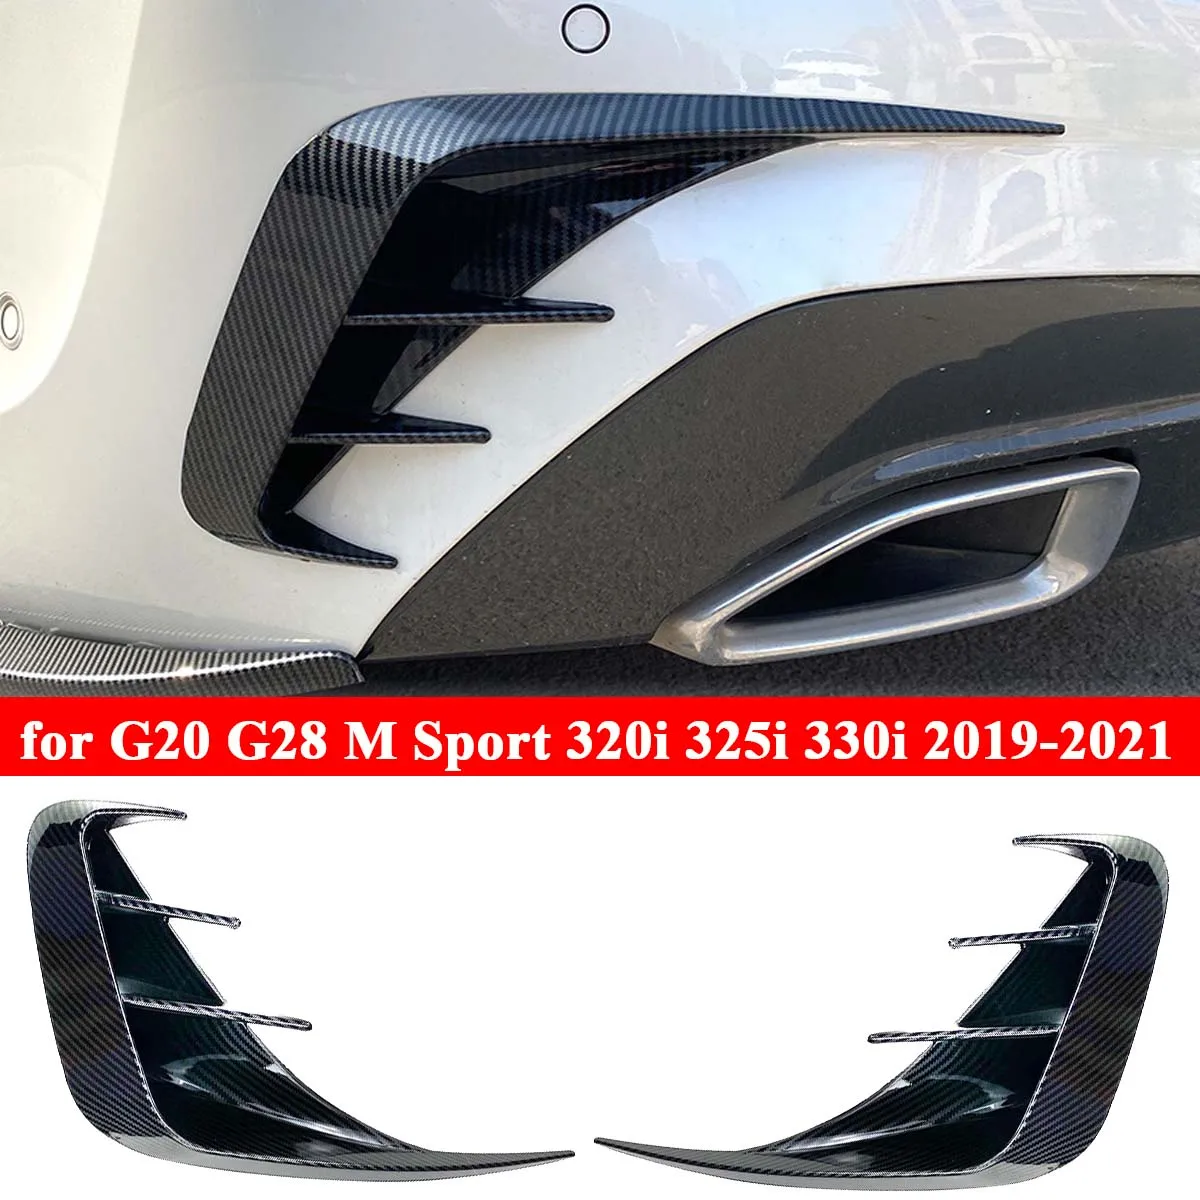 for BMW G20 G28 M Sport Rear Bumper Splitter Diffuser Side Cover Spoiler Canard Sticker 318i 320i 330i 2019-2021 Car Accessories